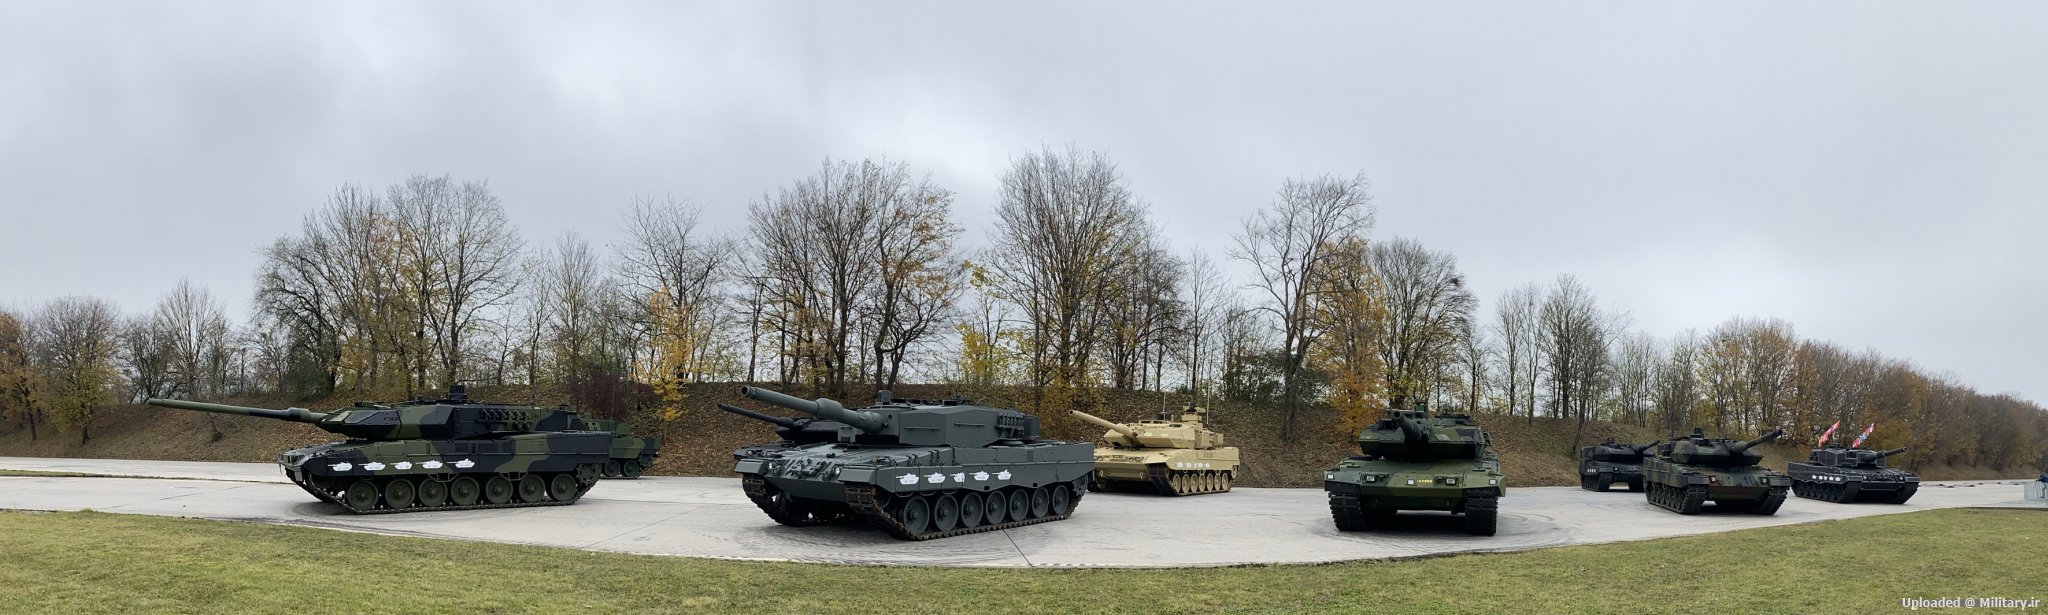 KMW-40-Jahre-Leopard-2-01.jpg